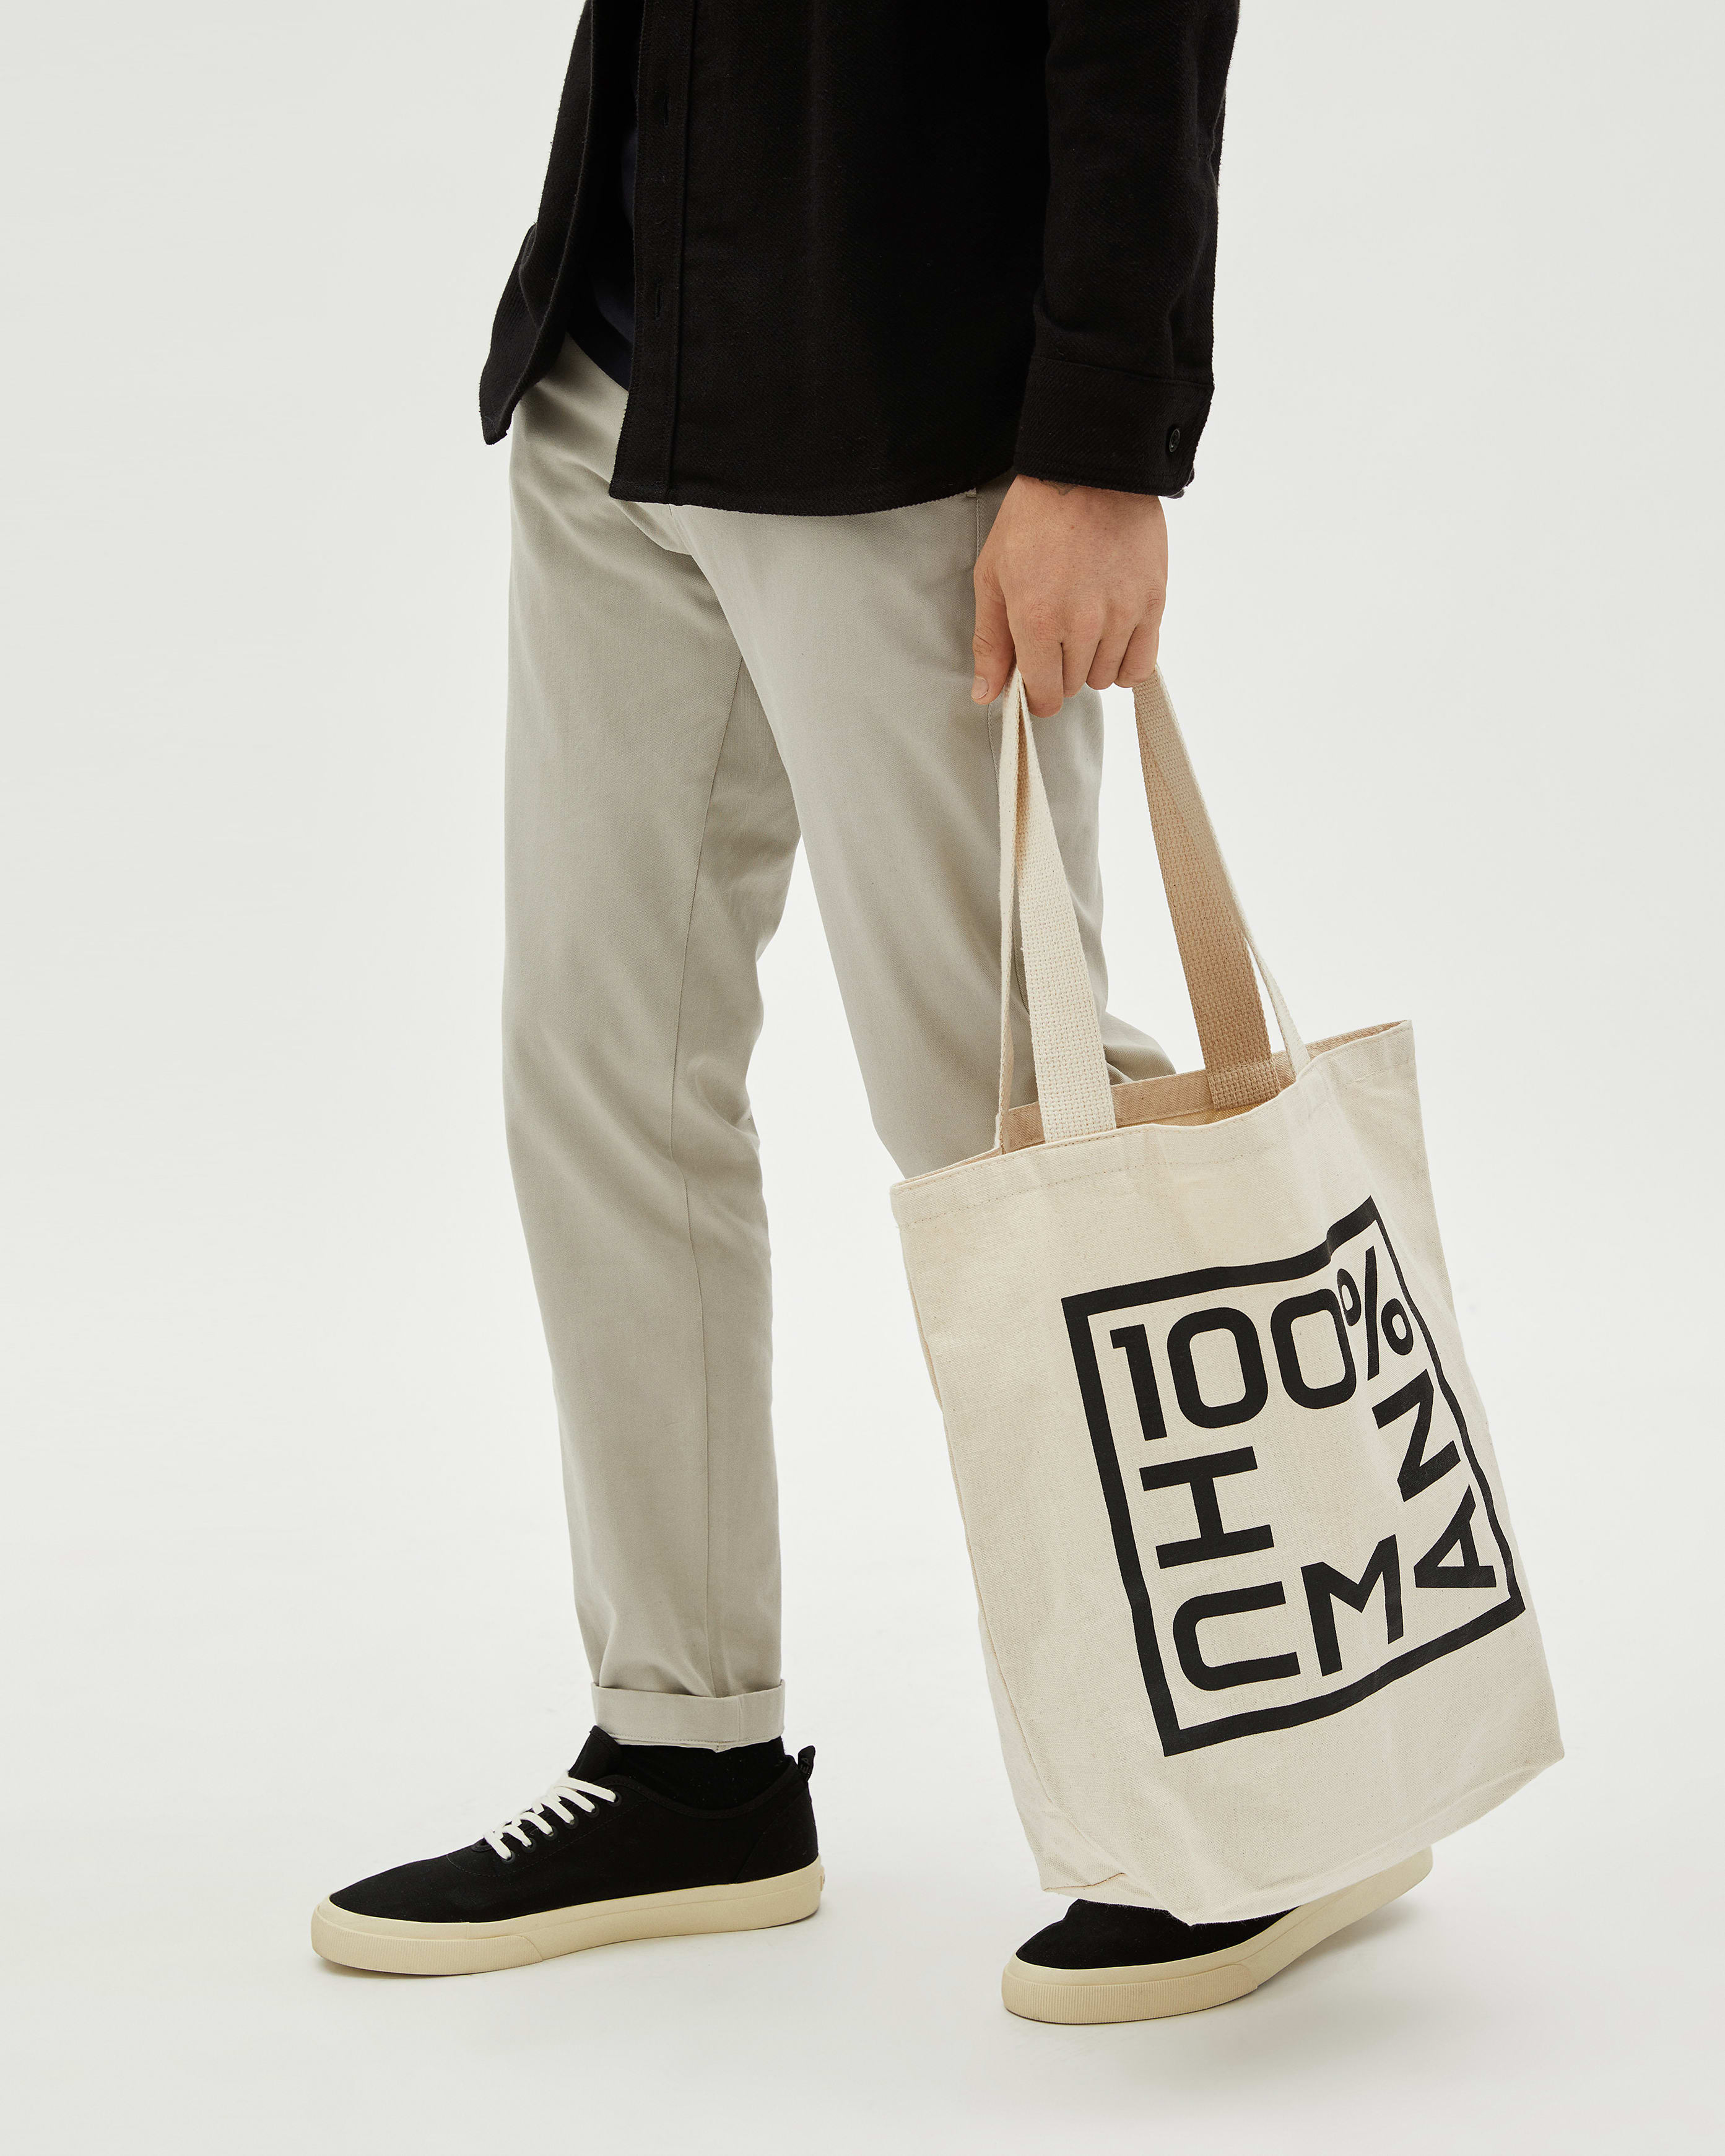 The 100% Human Tote Bag Canvas / Black – Everlane